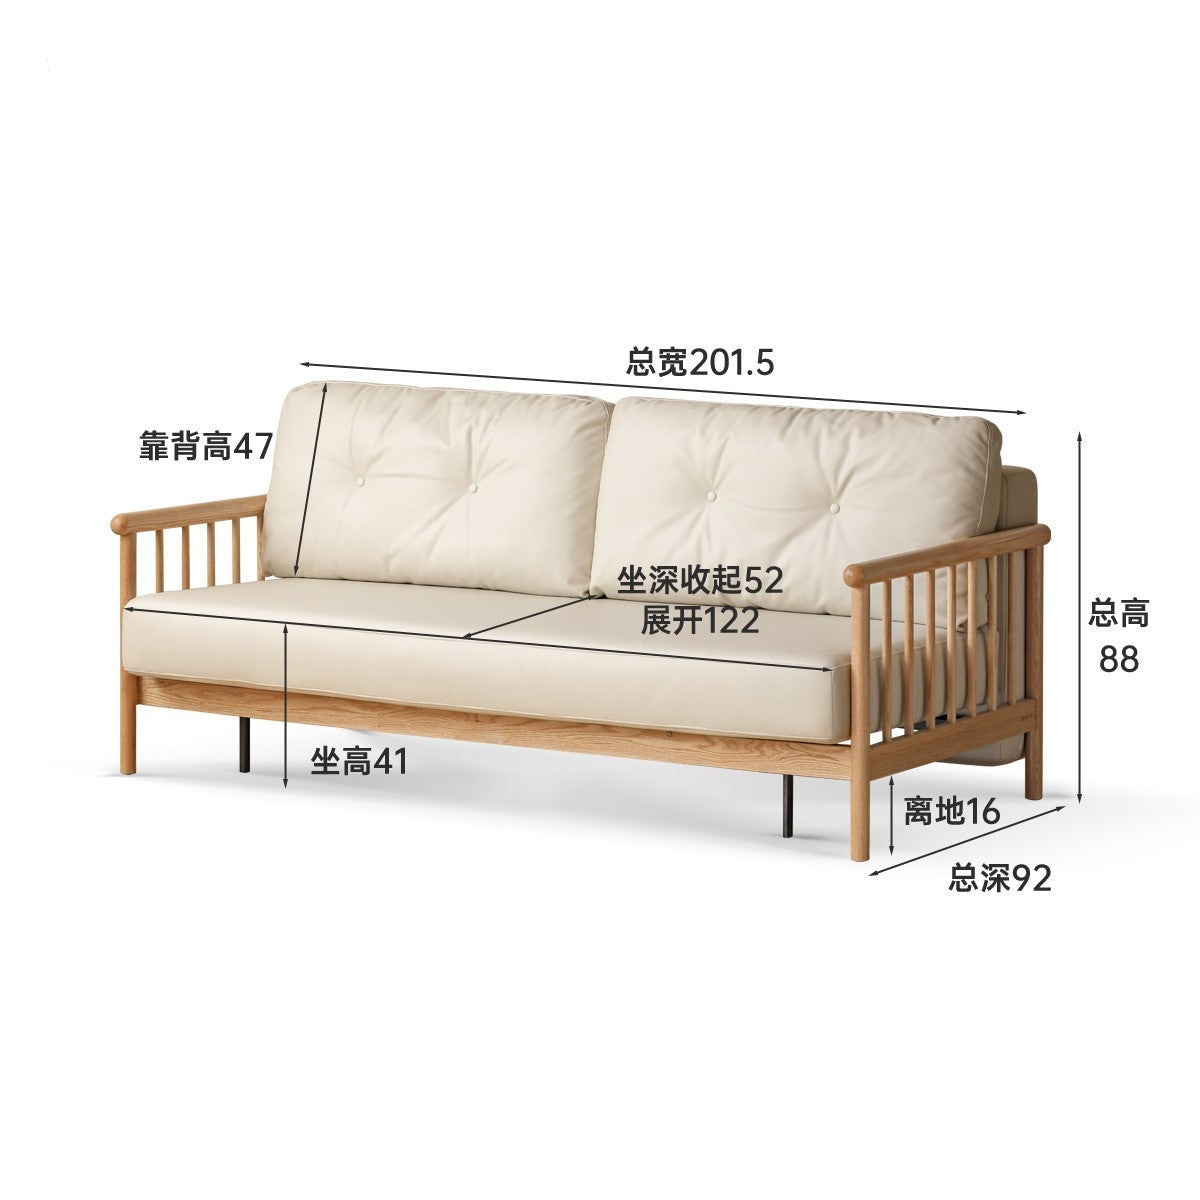 Oak solid wood sofa bed modern technology cloth +